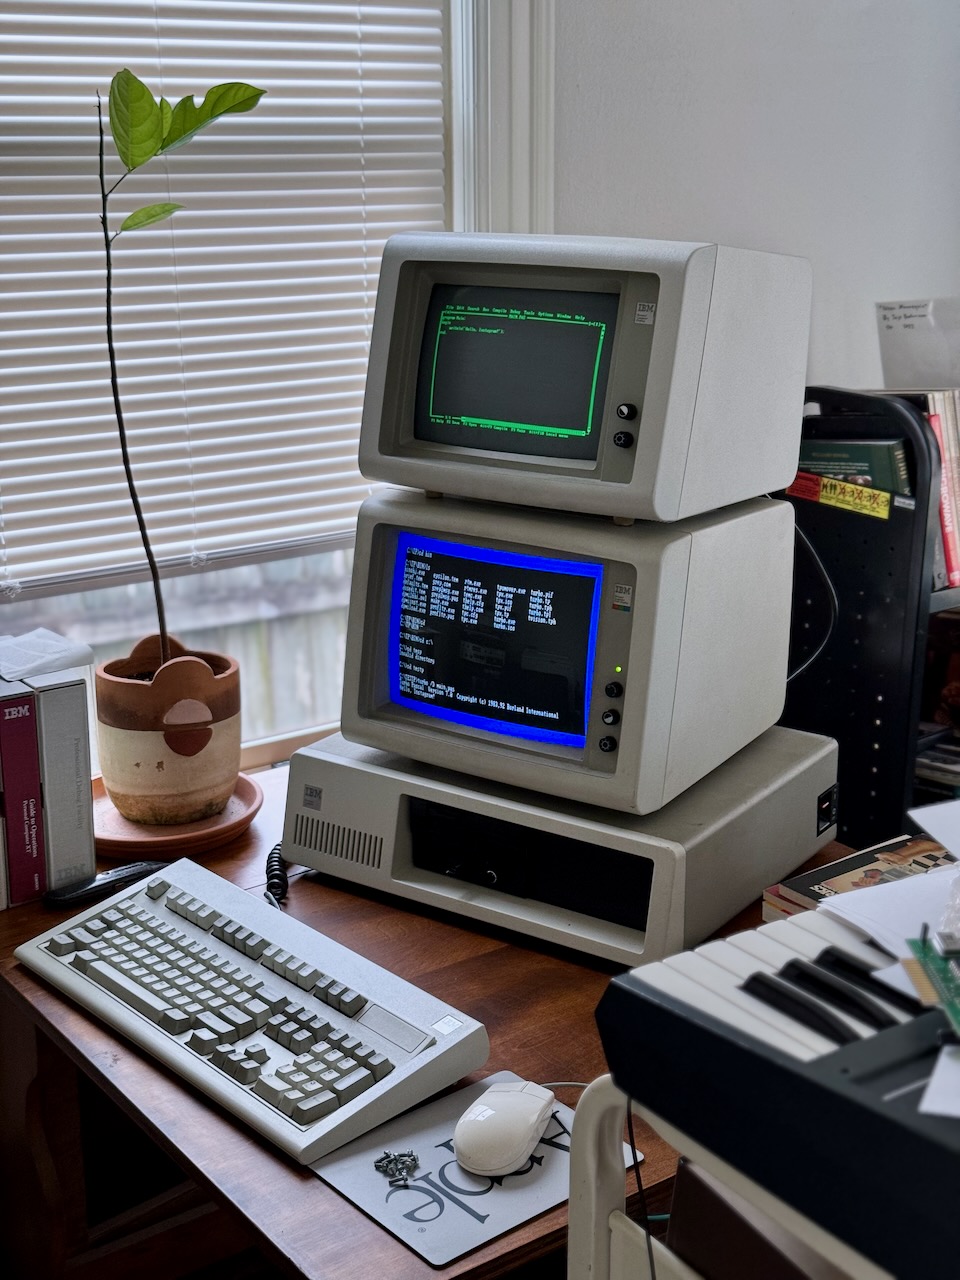 Turbo Pascal taking advantage of color and monochrome monitors